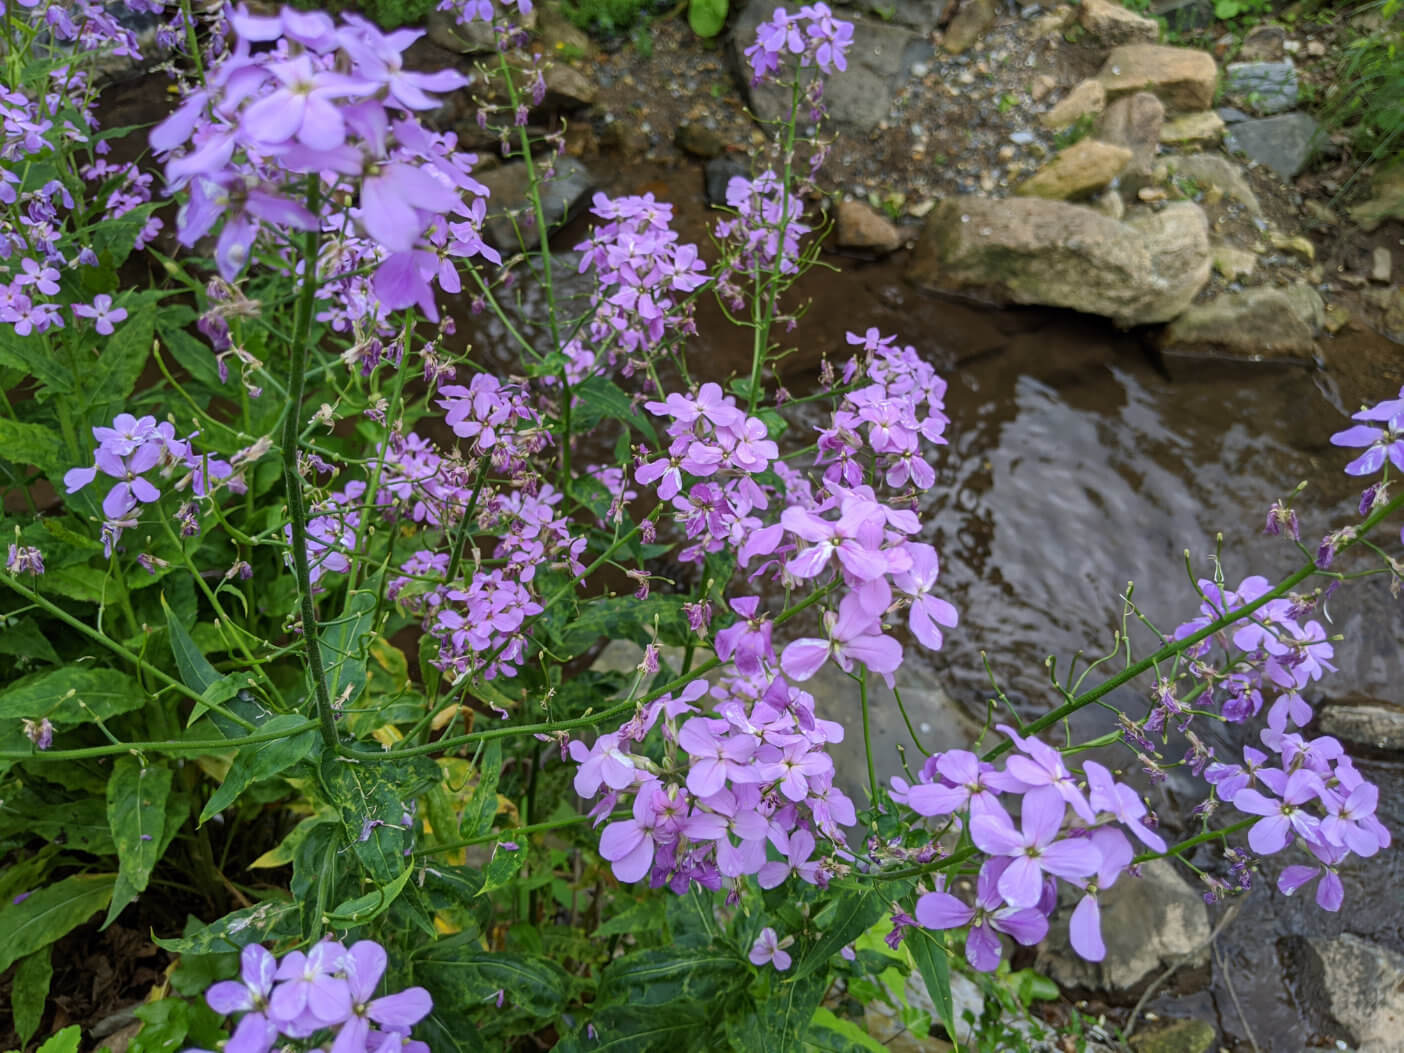 dames rocket flowers along a creek